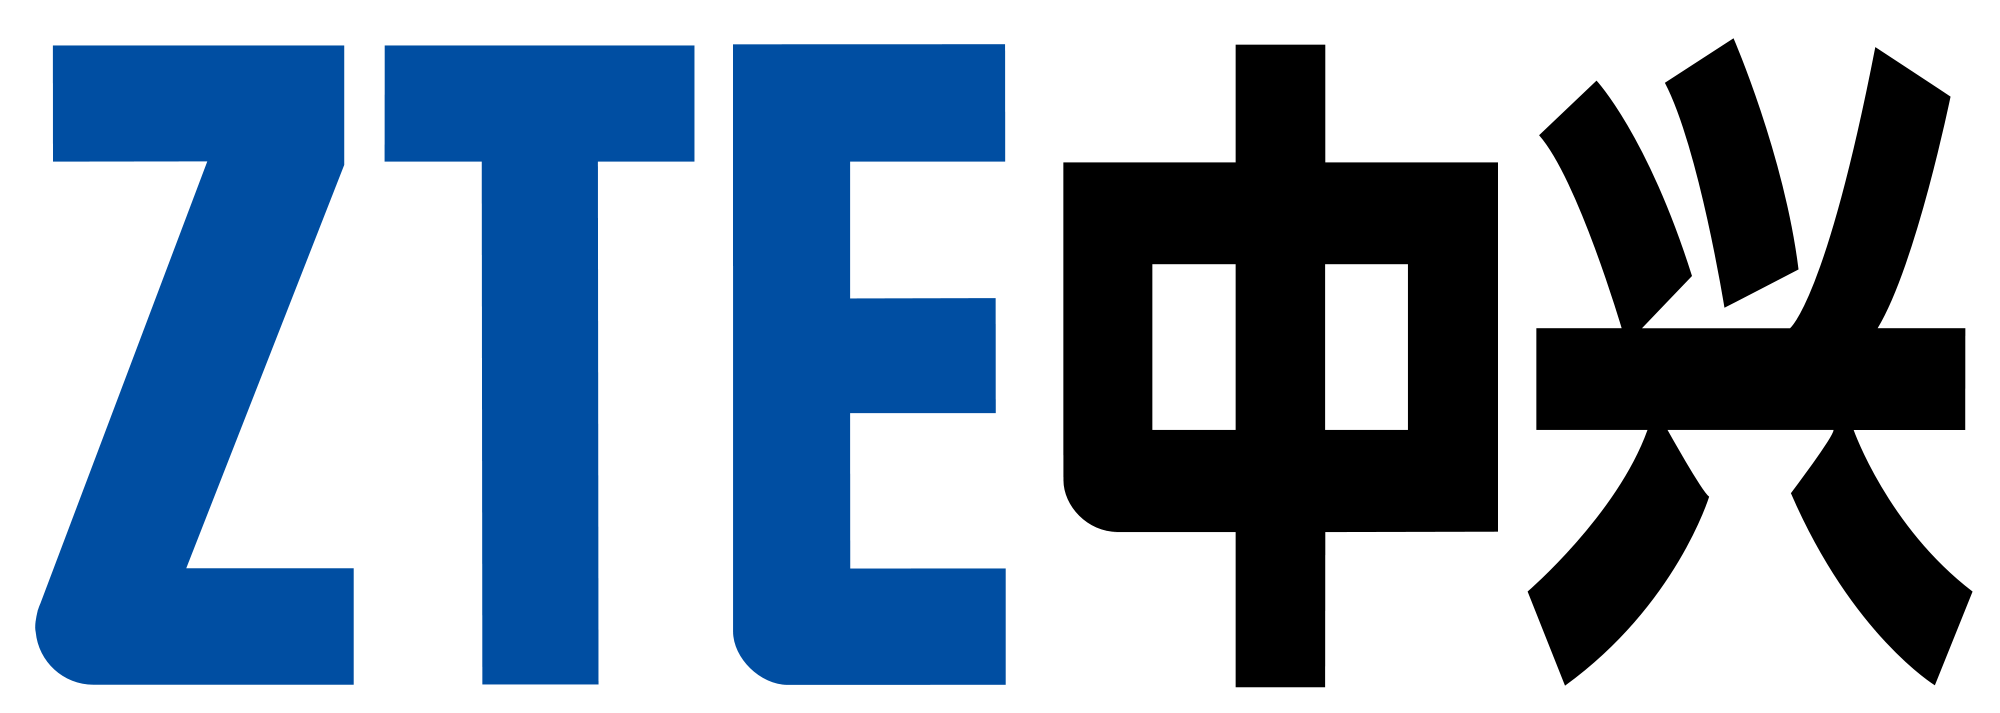 ZTE Corporation Logo - File:ZTE logo.svg - Wikimedia Commons